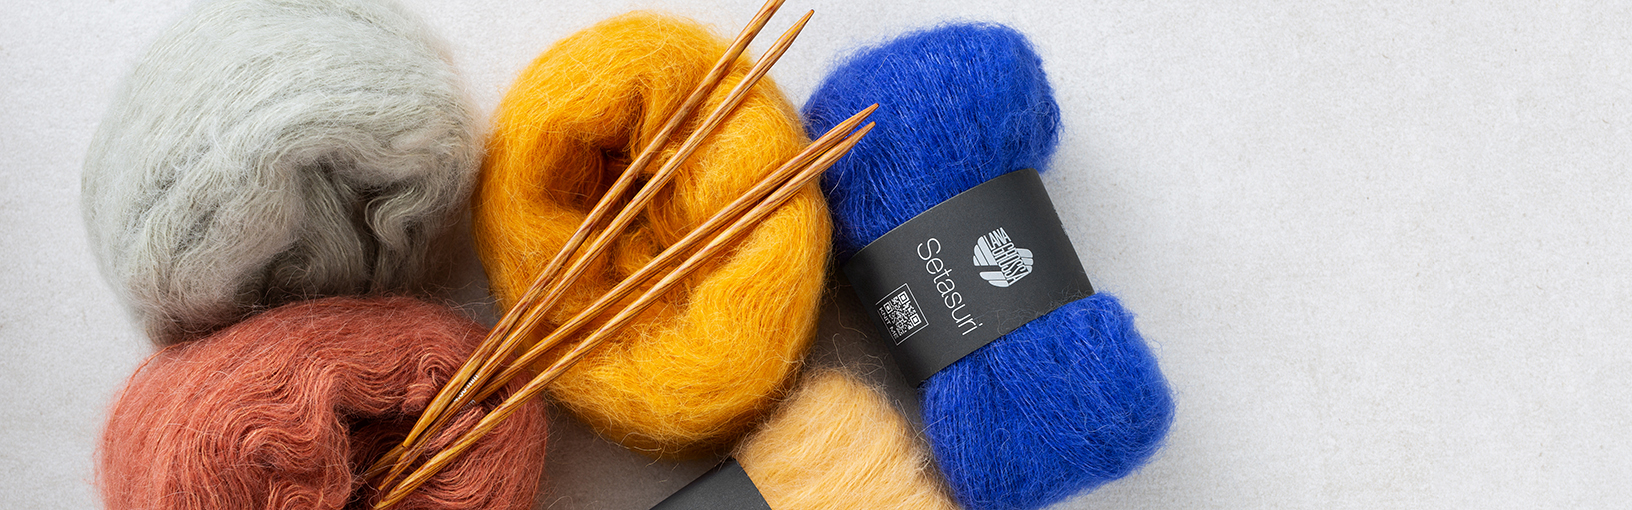 High quality yarns for knitting, crocheting & felting Lana Grossa Yarns | Spring / Summer